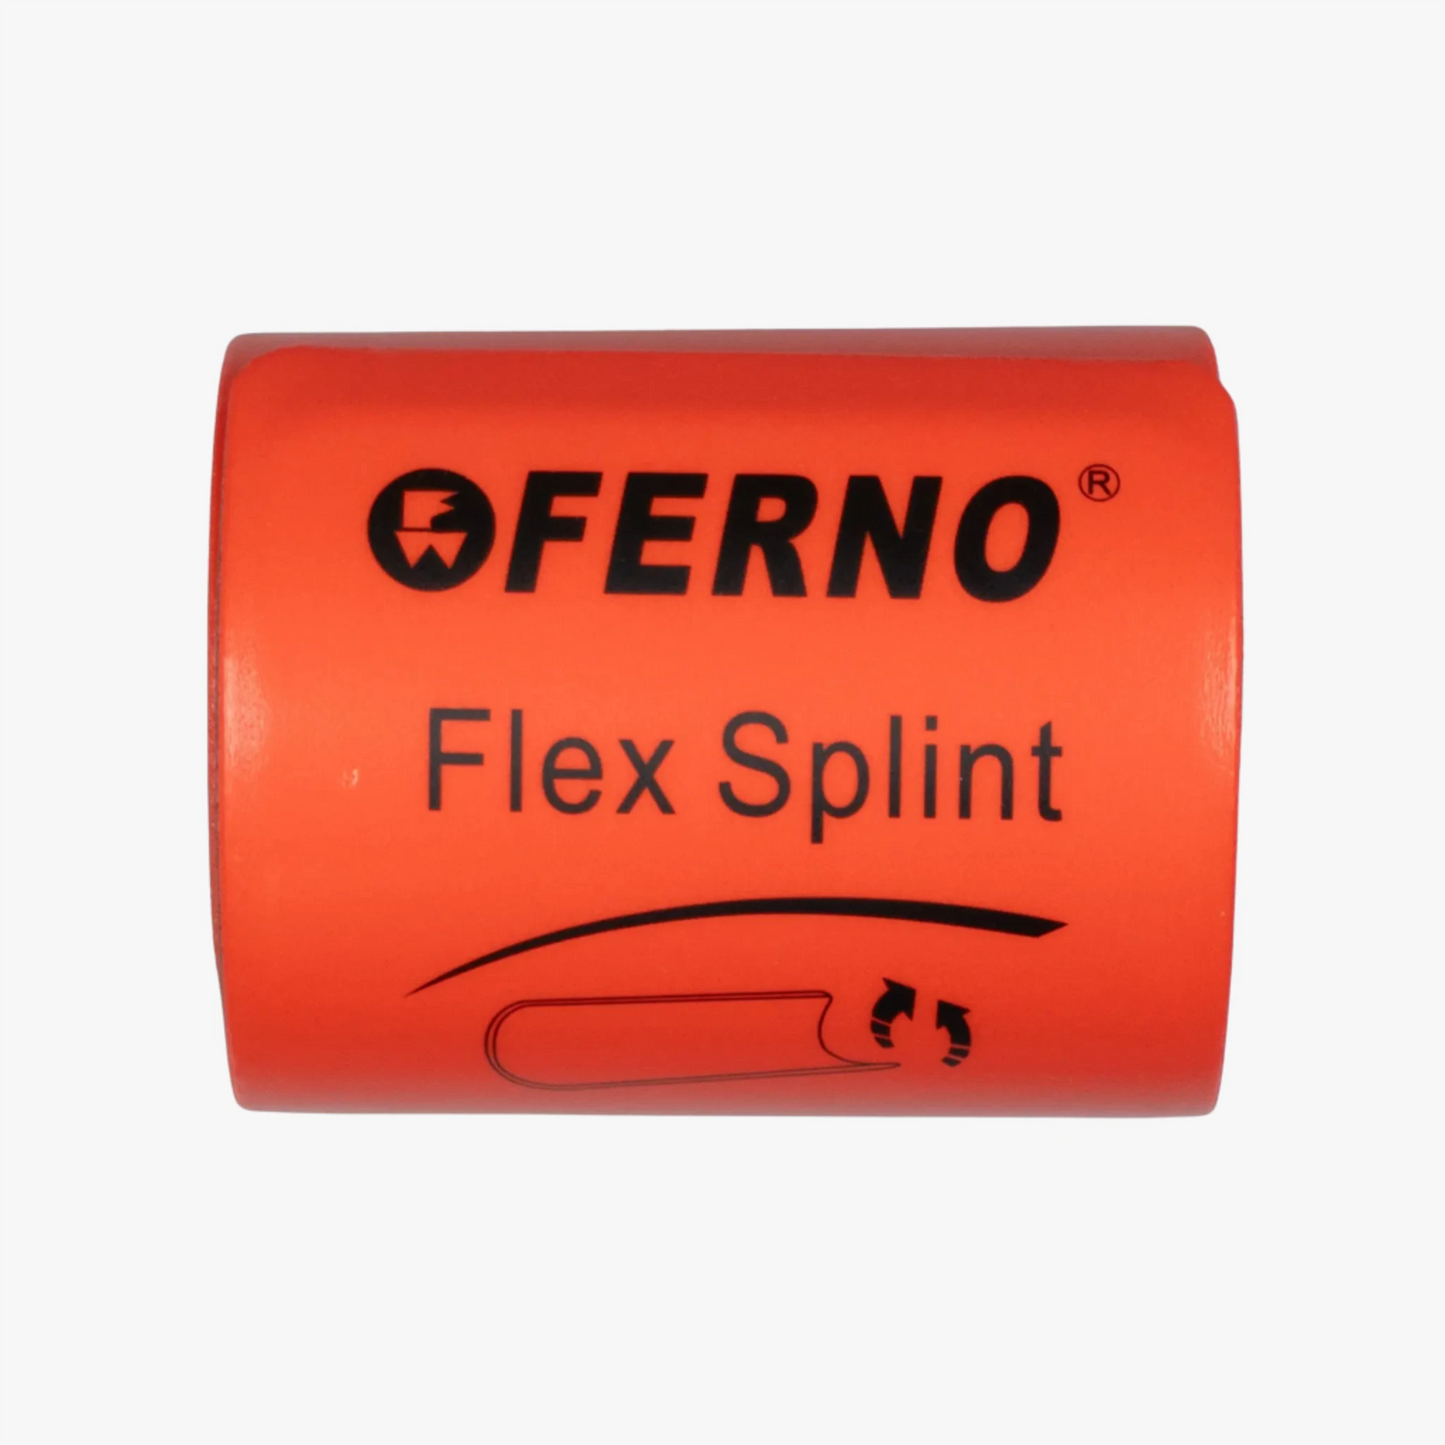 Ferno Flex Splint Rulle 92 cm